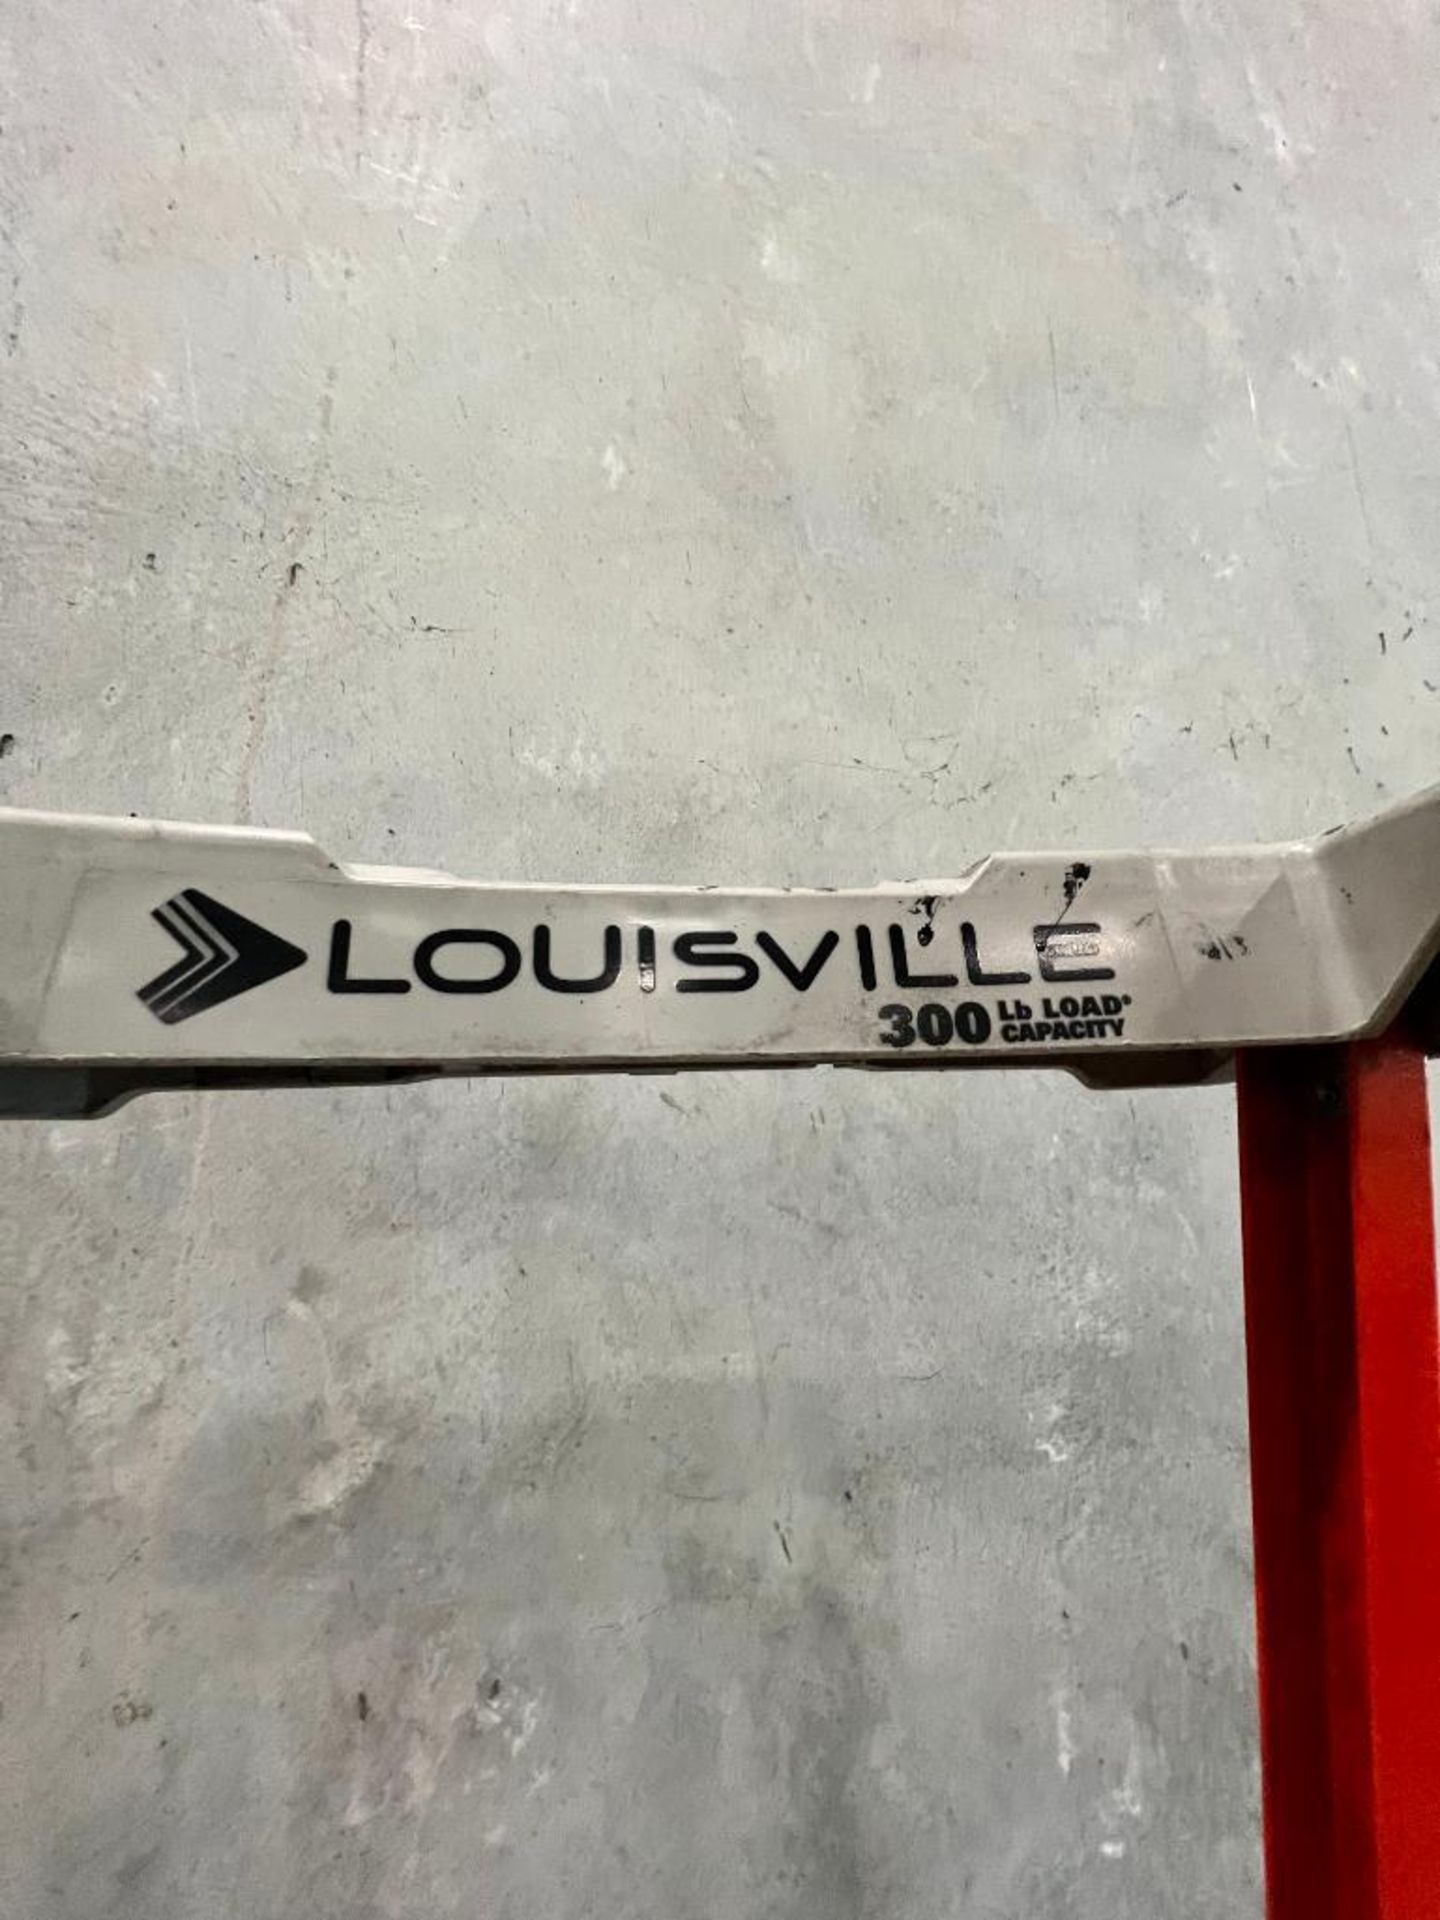 Louisville 4' Ladder, 300 LB. Max., Model FXP1704 - Image 5 of 5